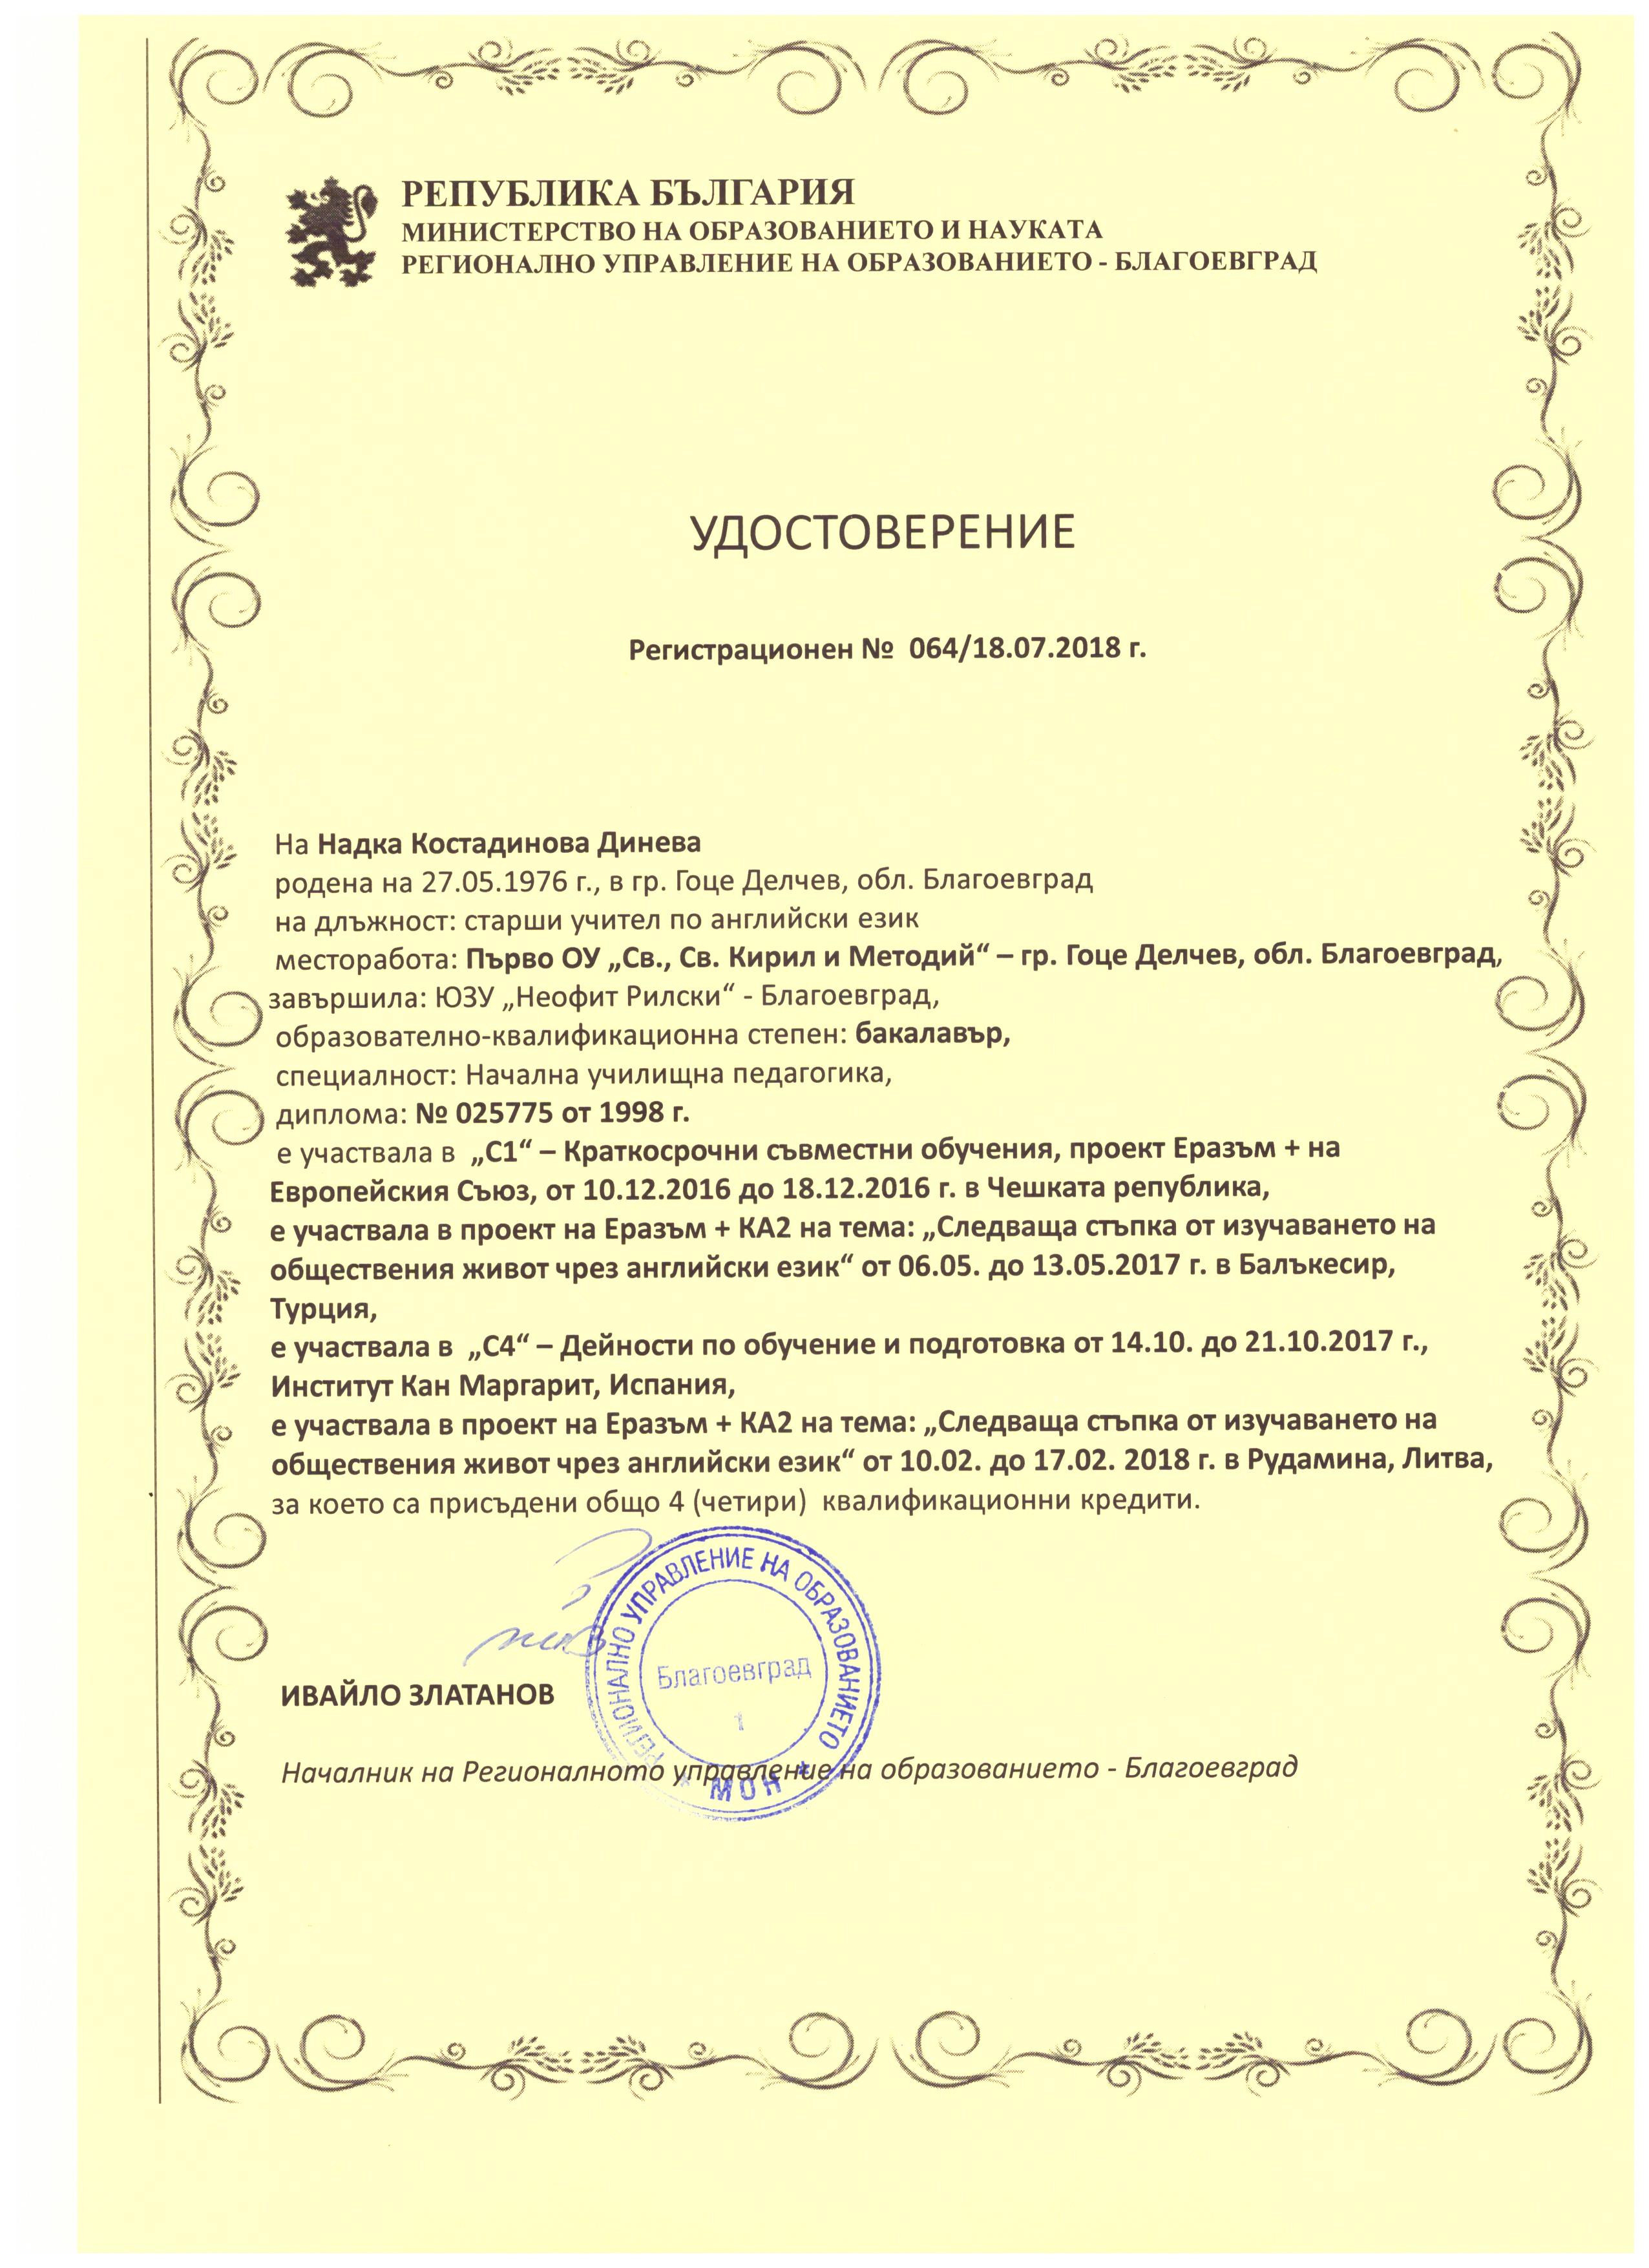 Nadka Dineva - 4 qualification credits from Regional Education Diectorate - Blagoevgrad